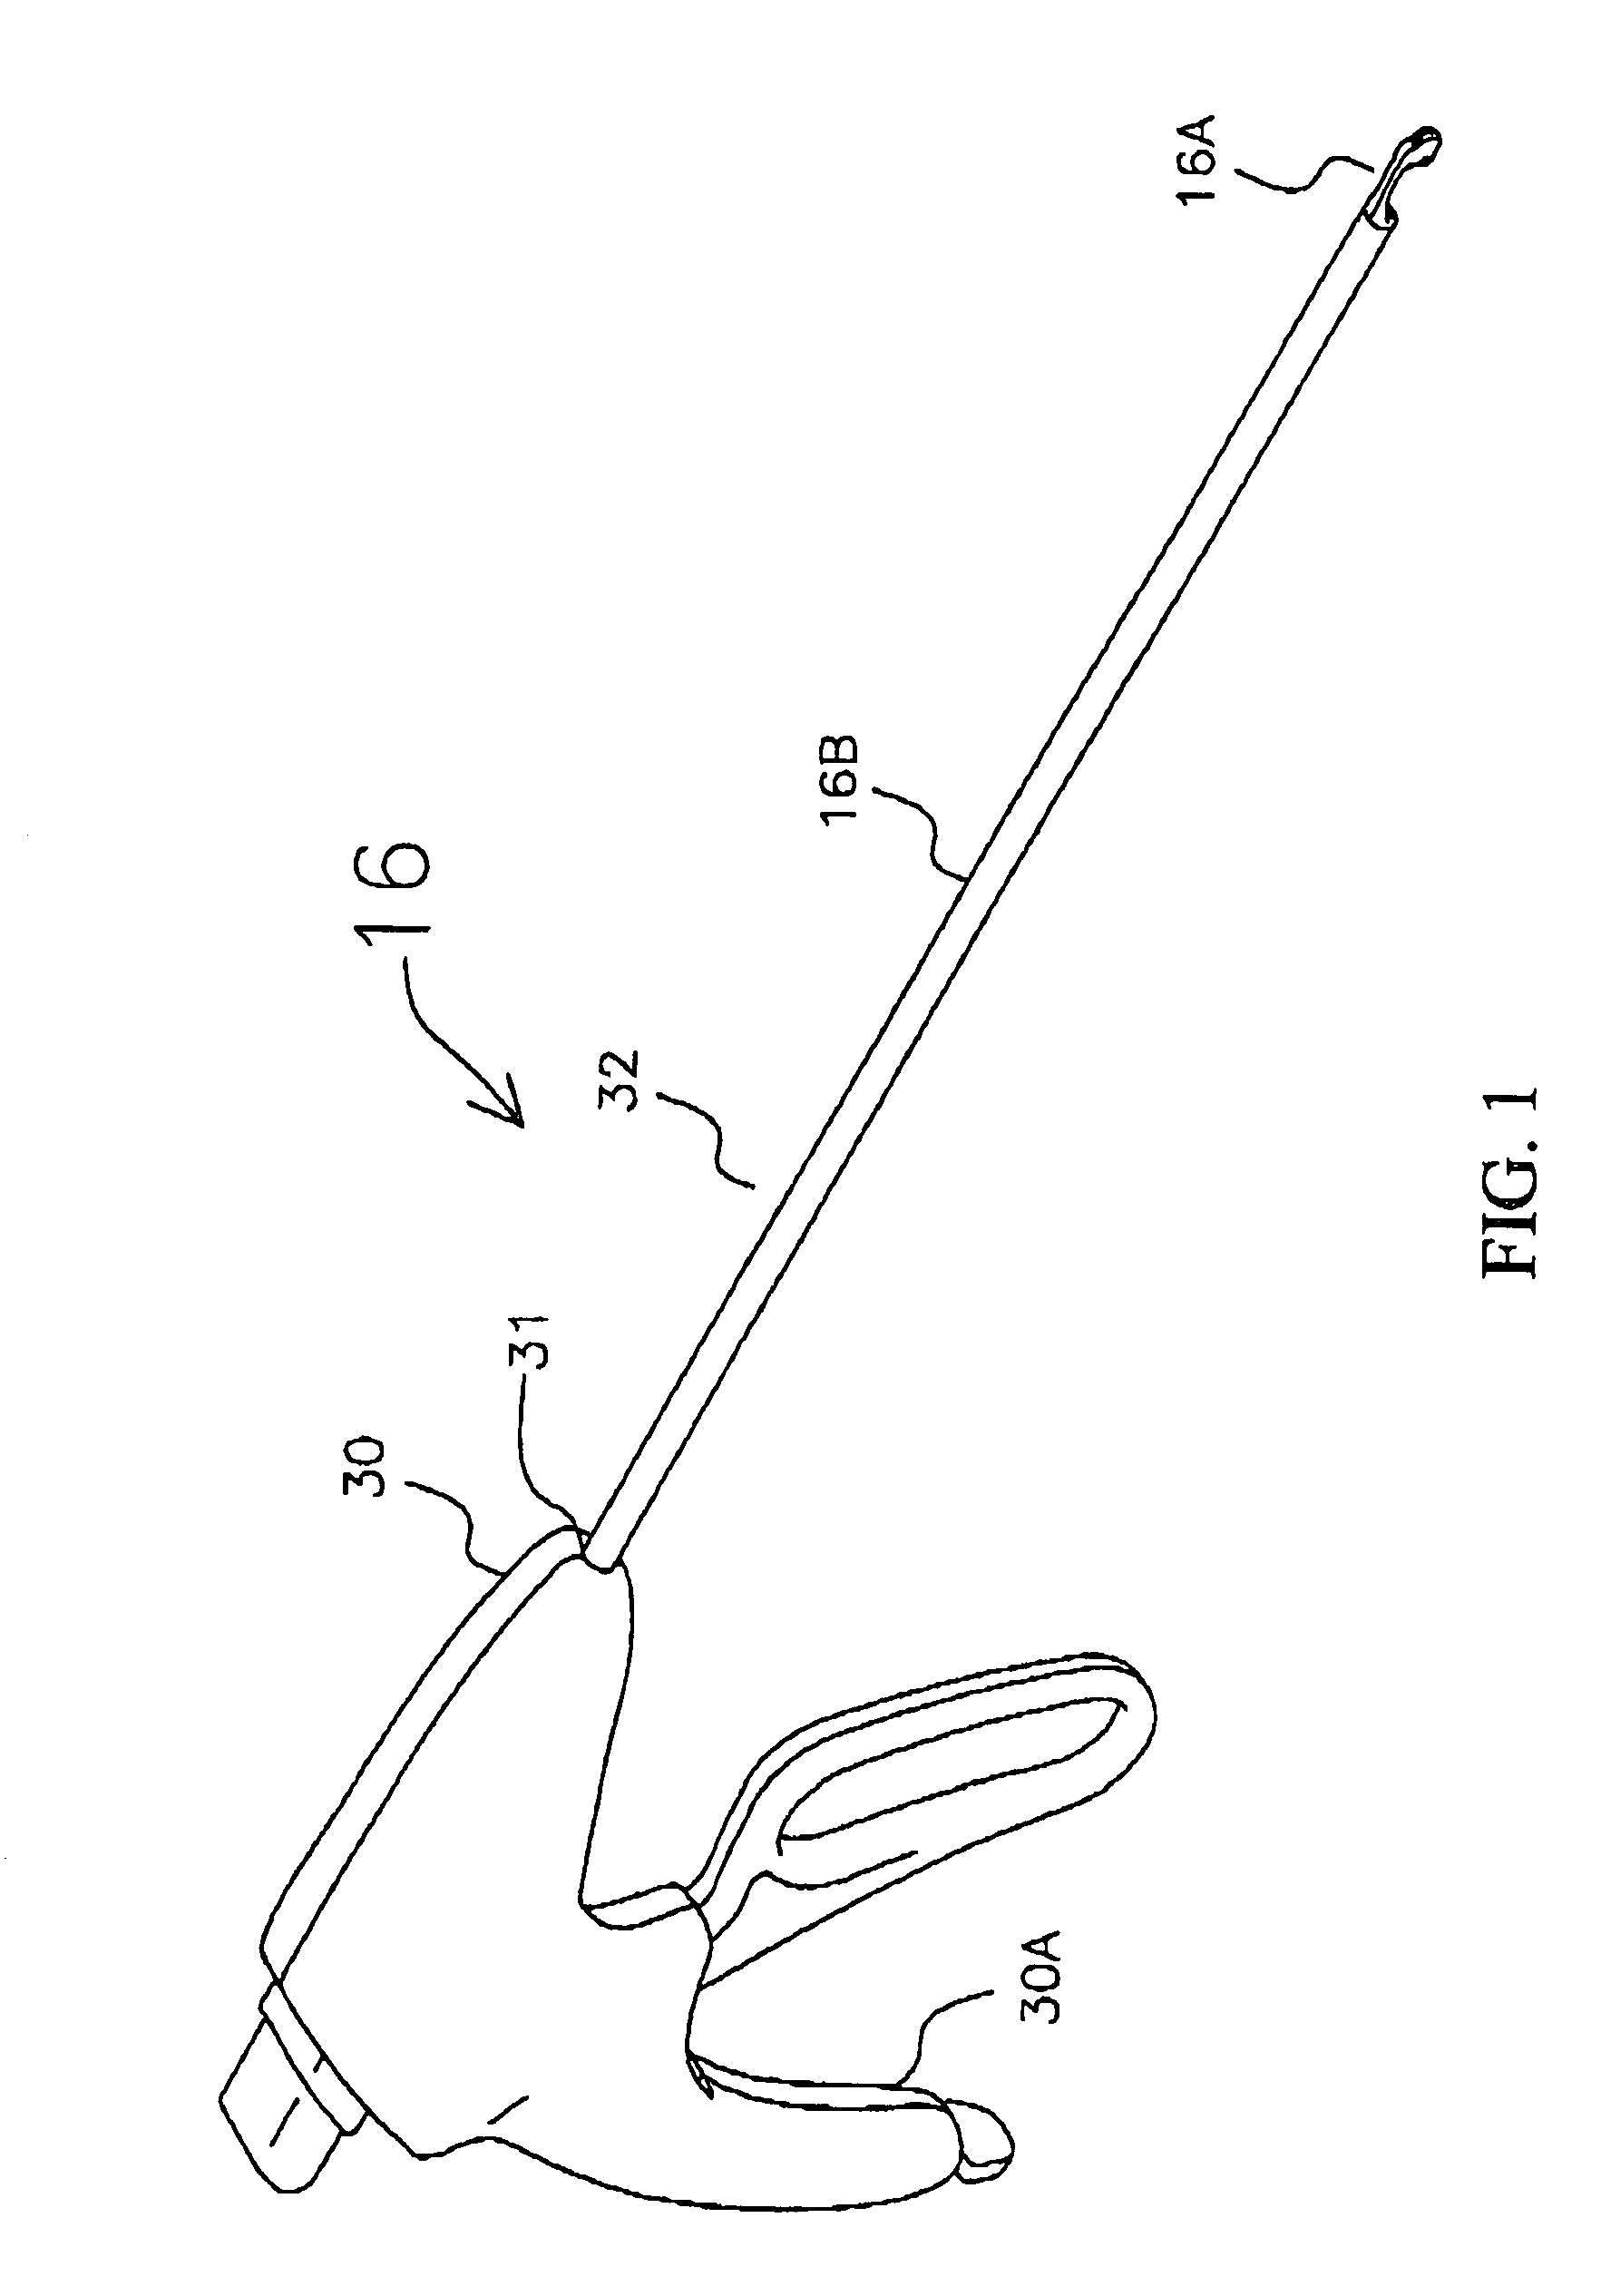 Sew-right running stitch instrument